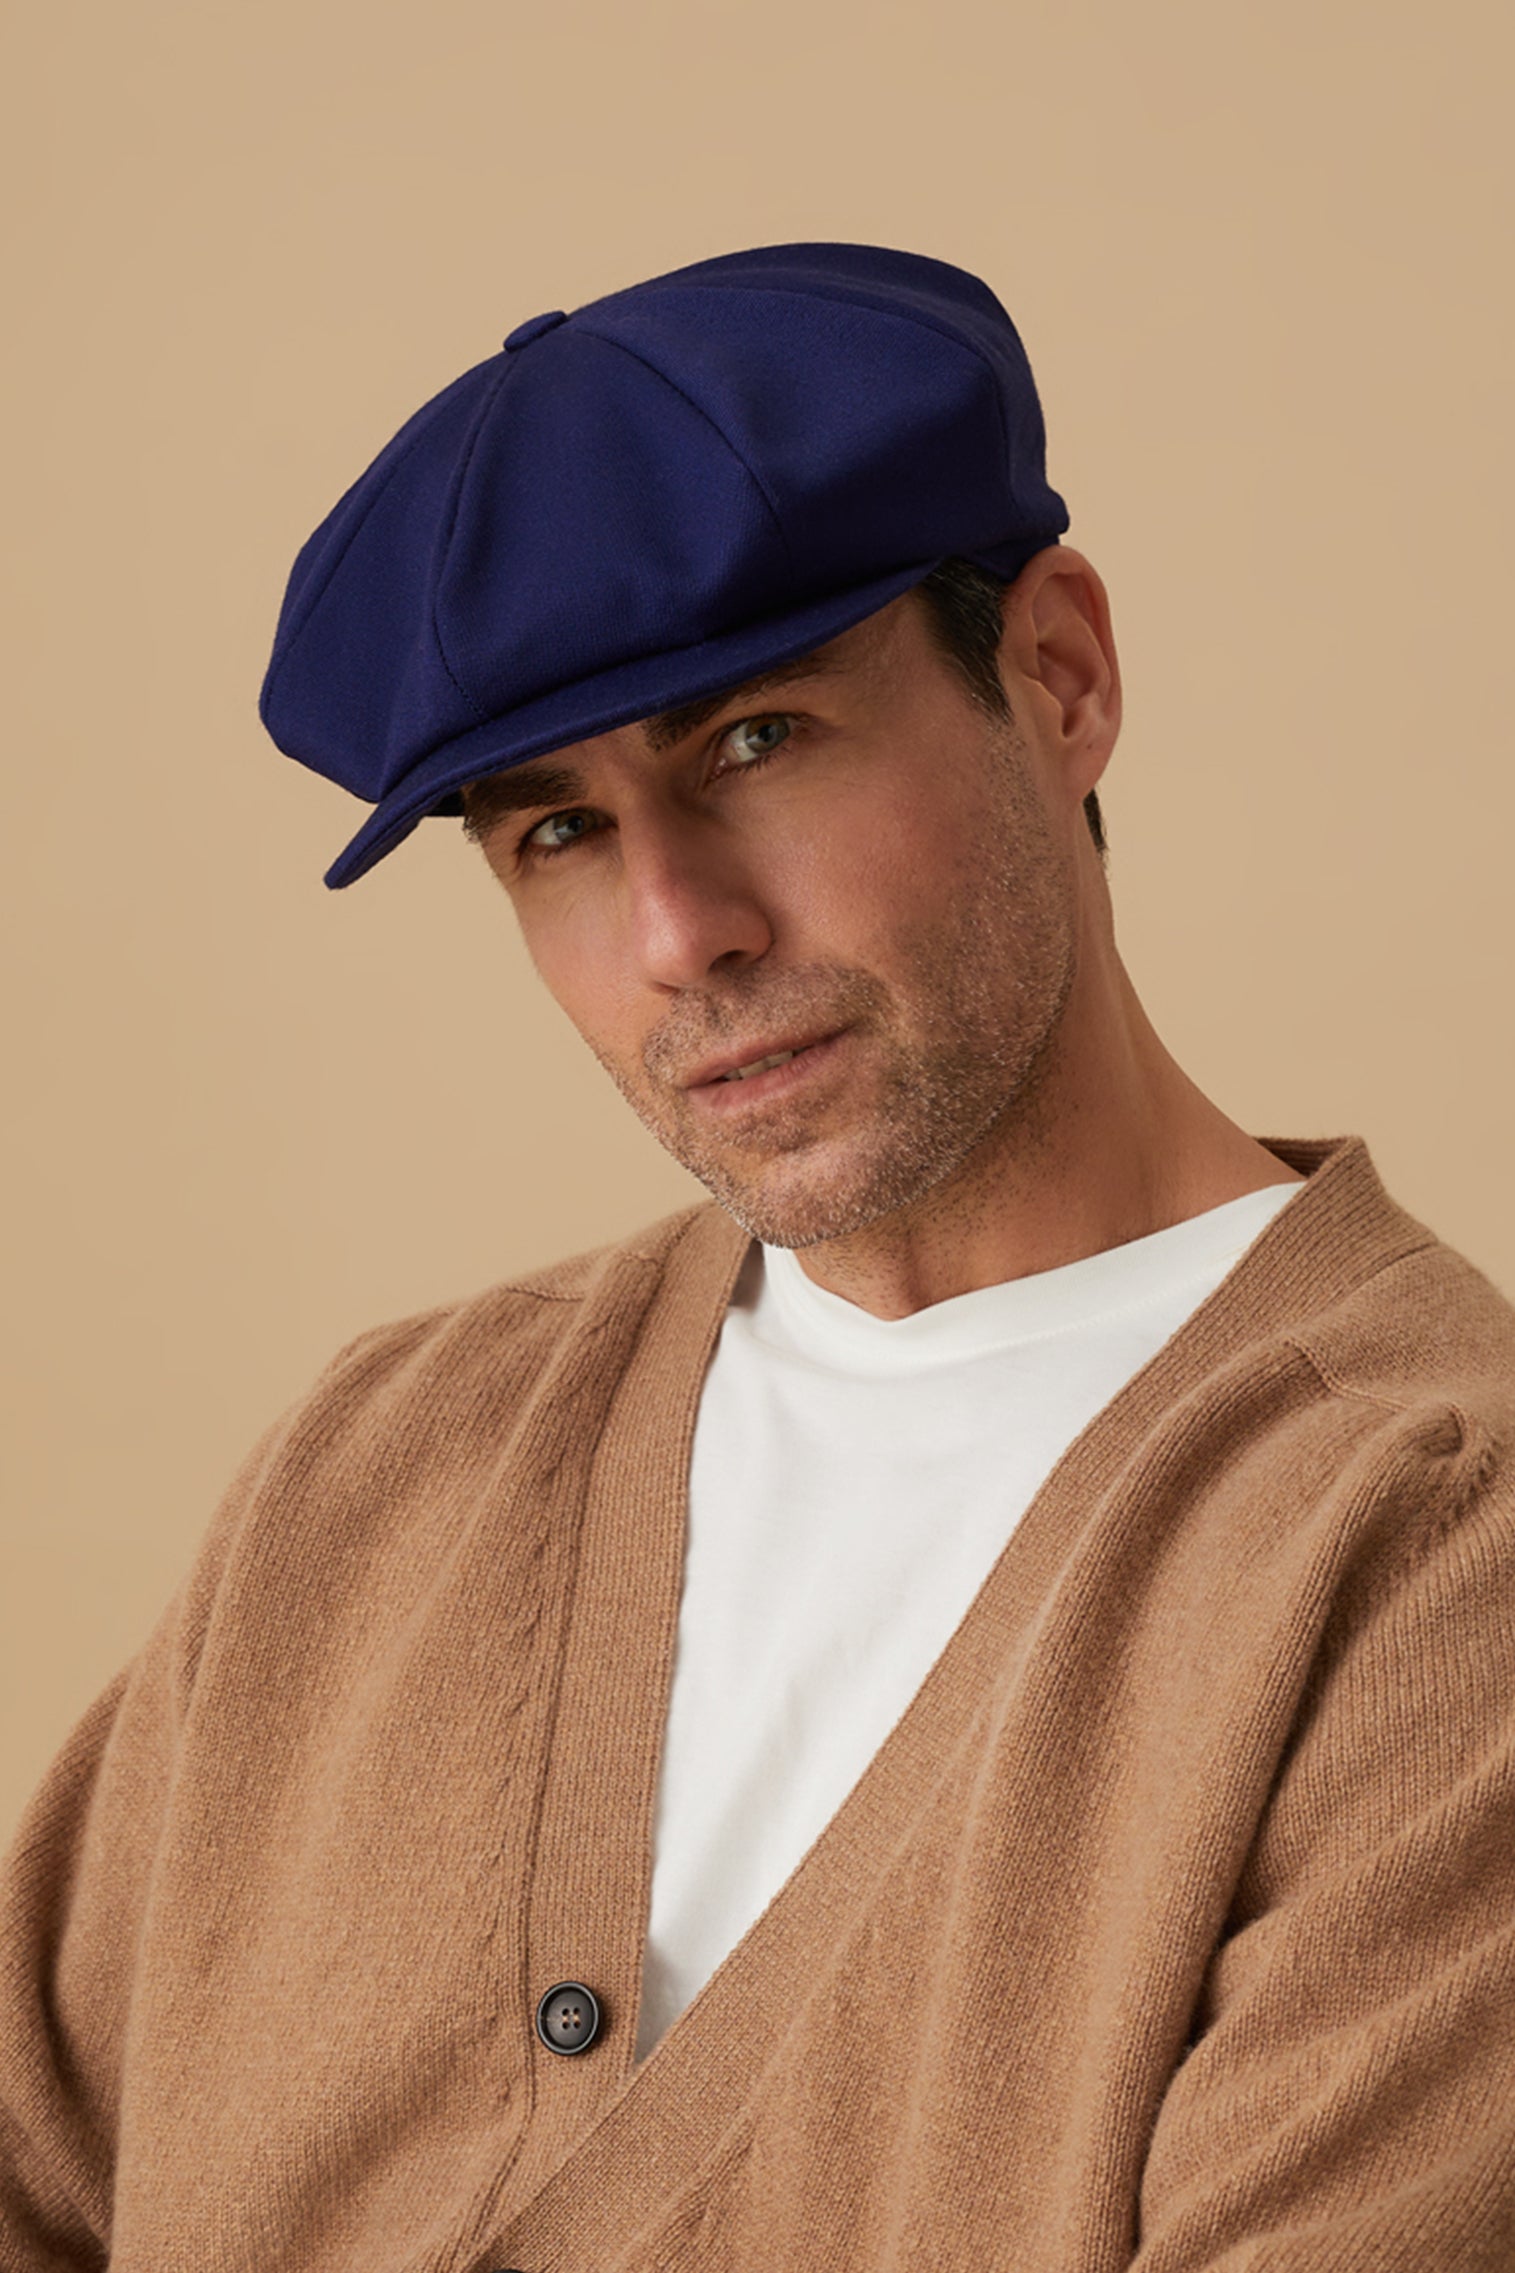 Tremelo Dark Blue Bakerboy Cap - Hats for Tall People - Lock & Co. Hatters London UK